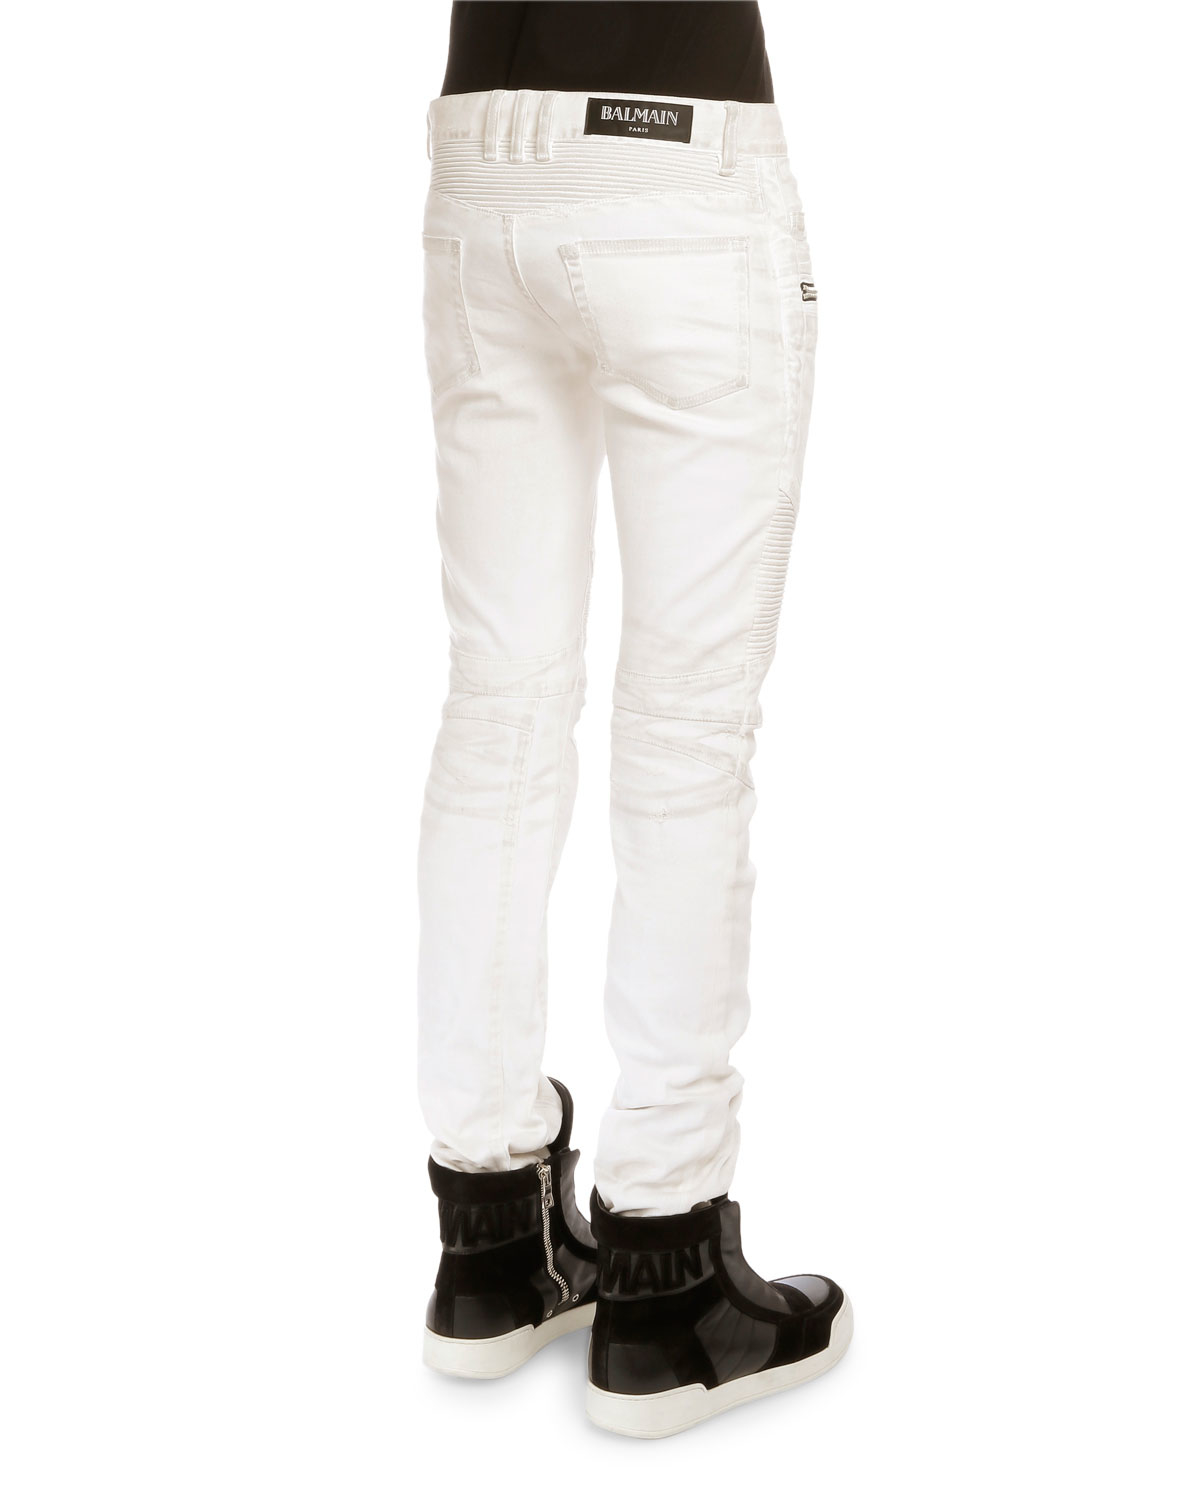 Lyst - Balmain Dirty-wash Denim Biker Jeans in White for Men